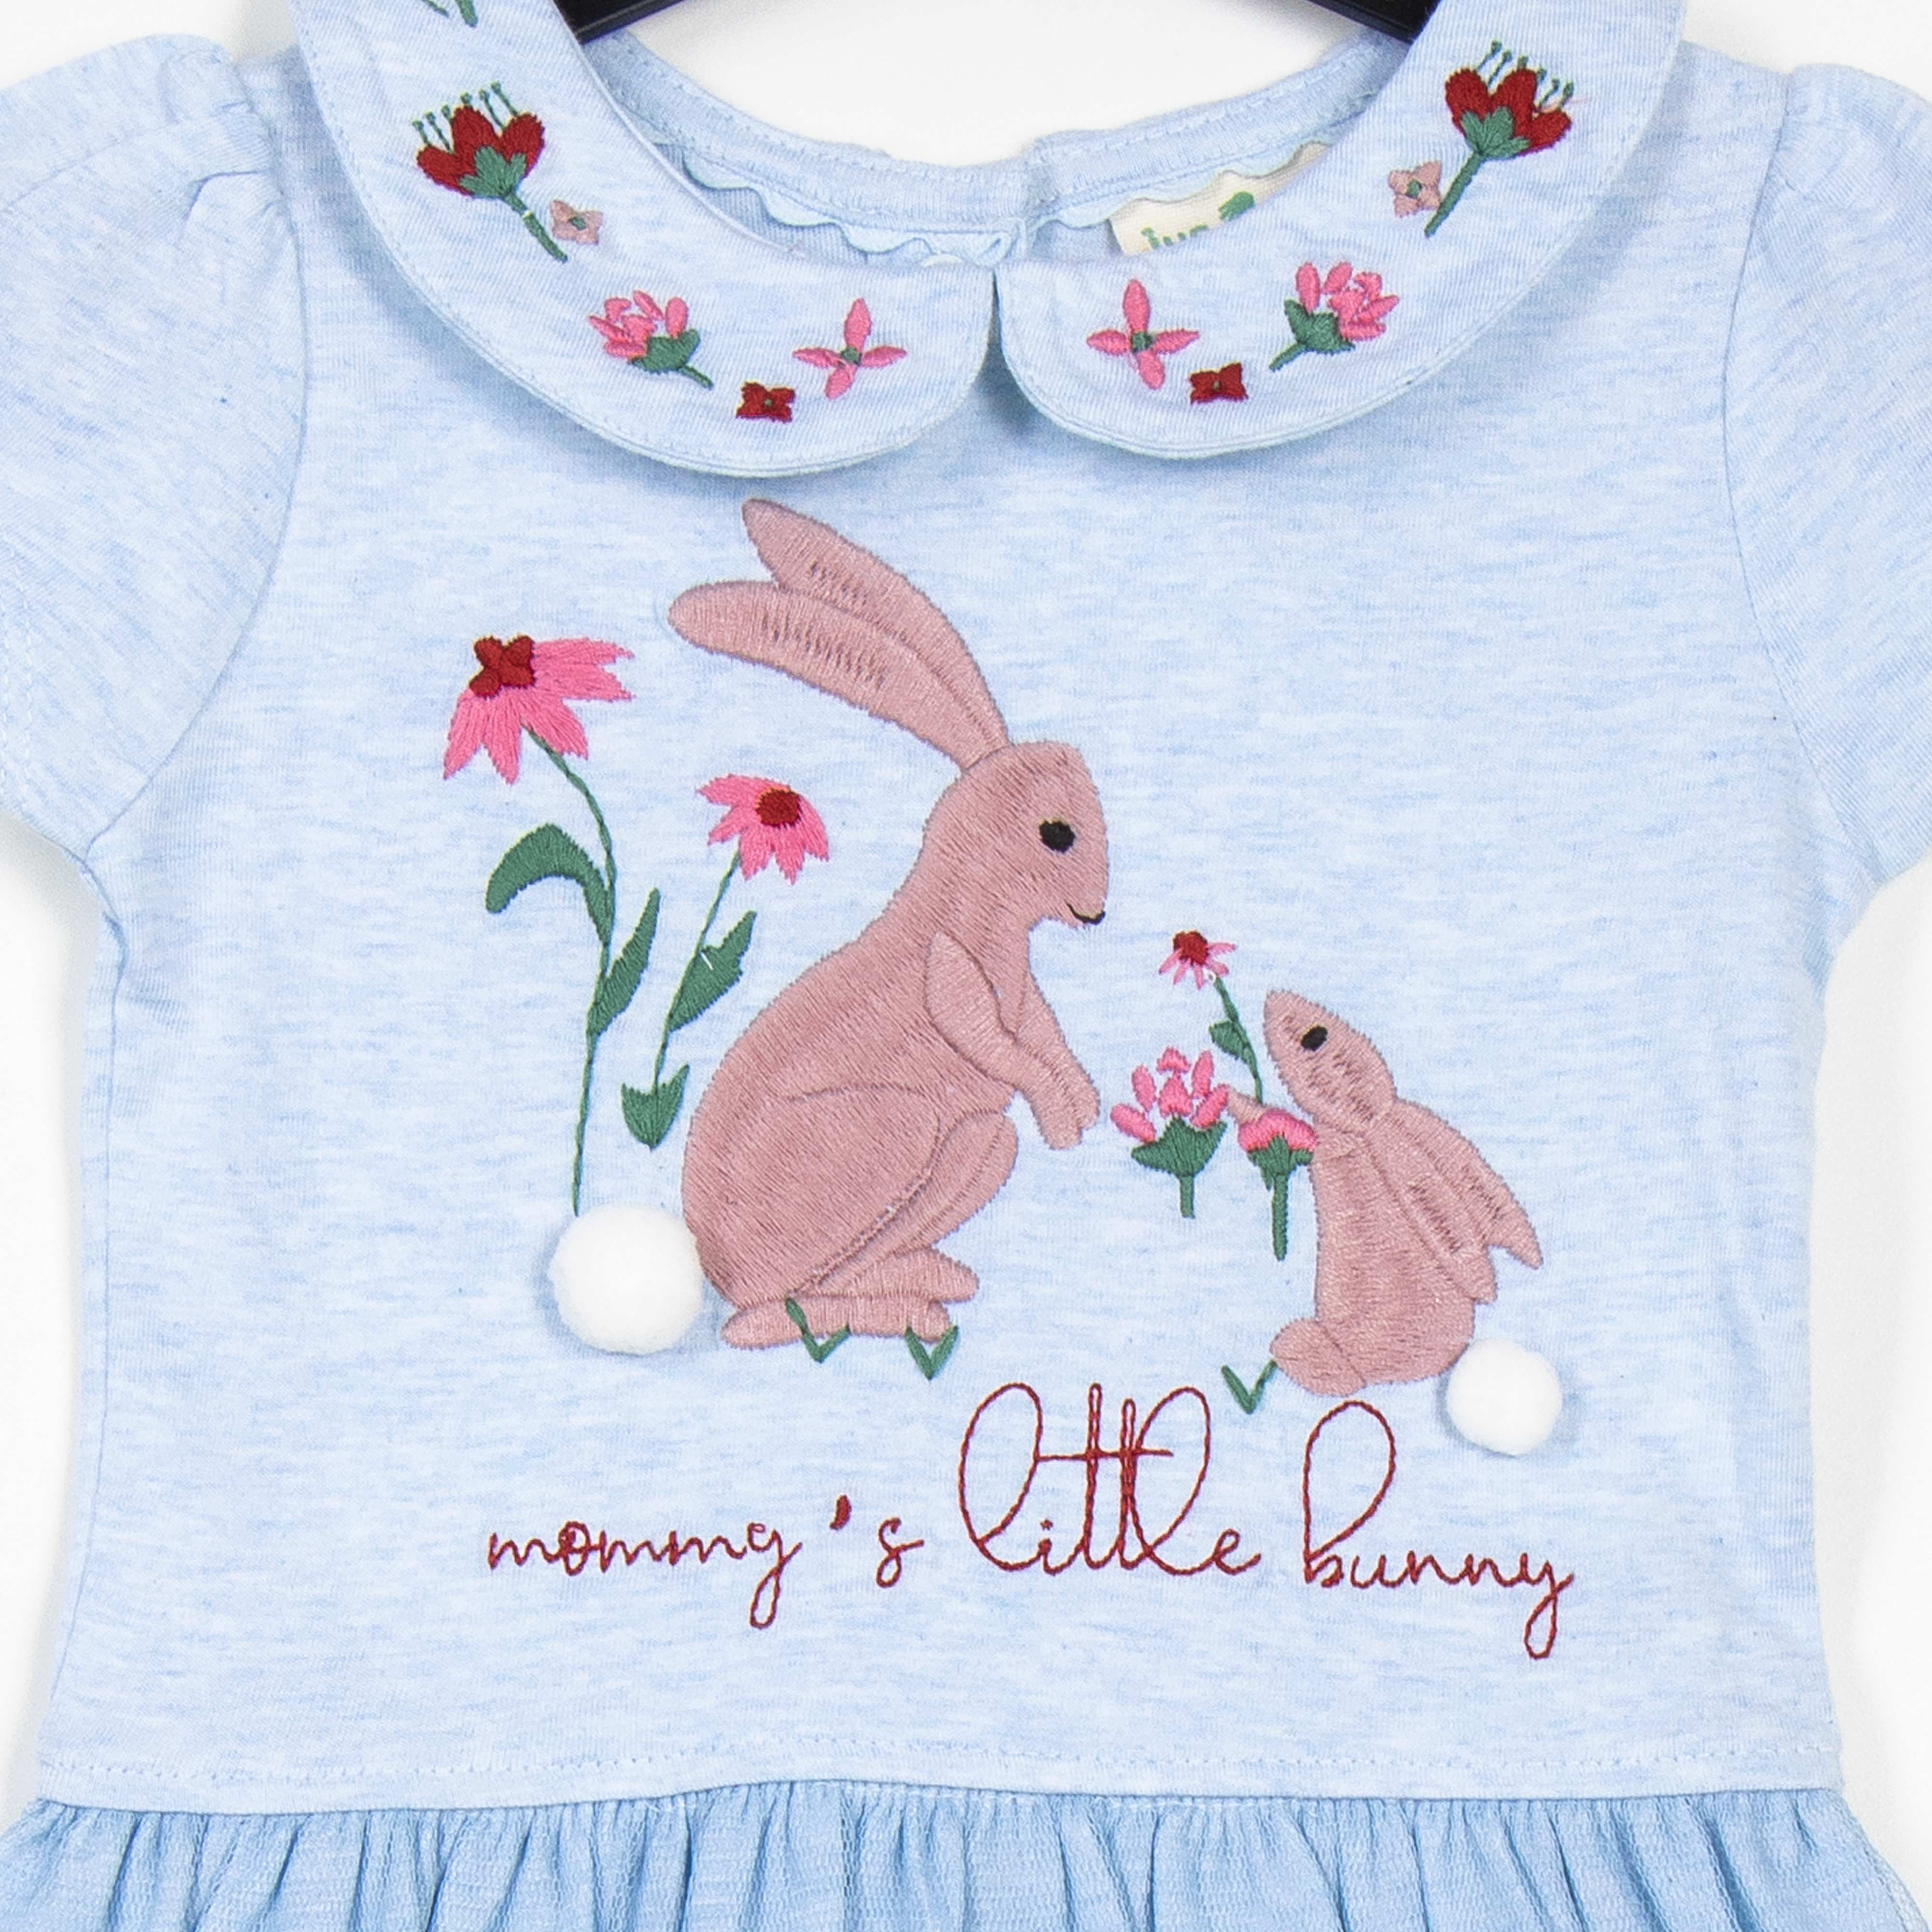 Girls Rabbit Embroidery Dress